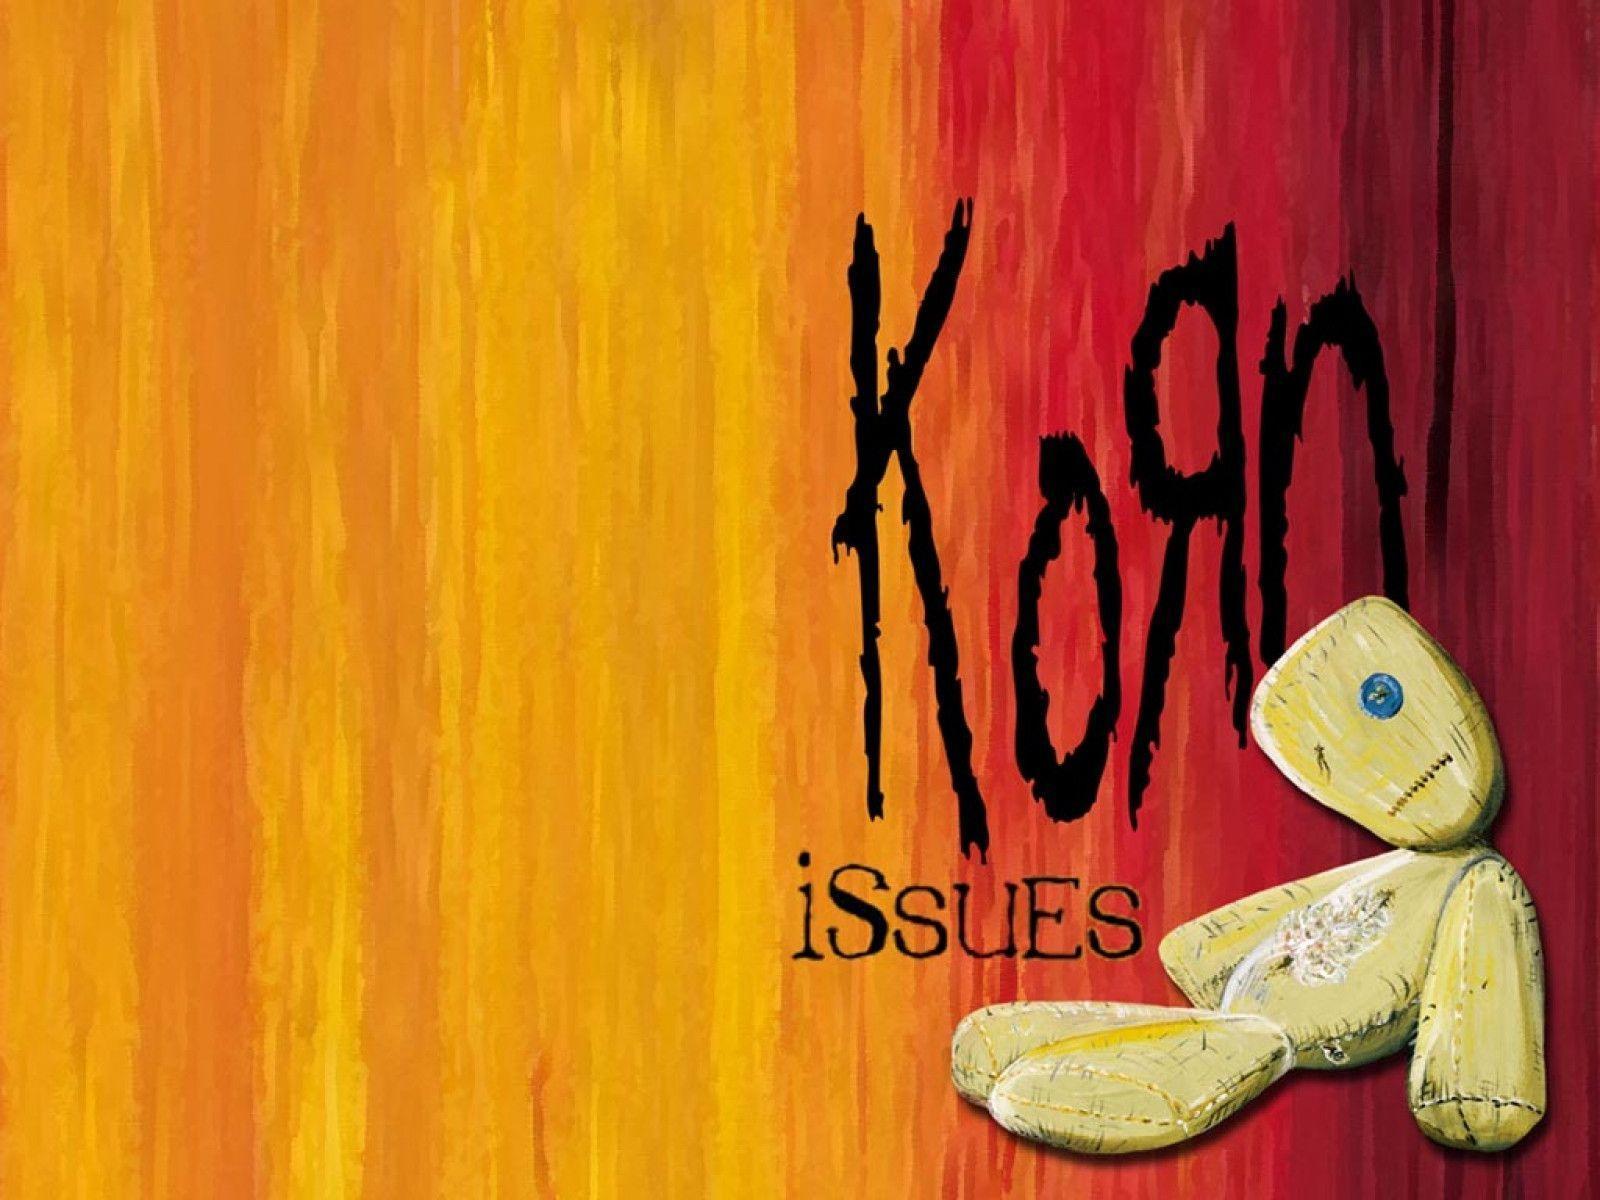 Download Korn Logo Wallpaper Hd Backgrounds Download Itl Cat - issues korn roblox